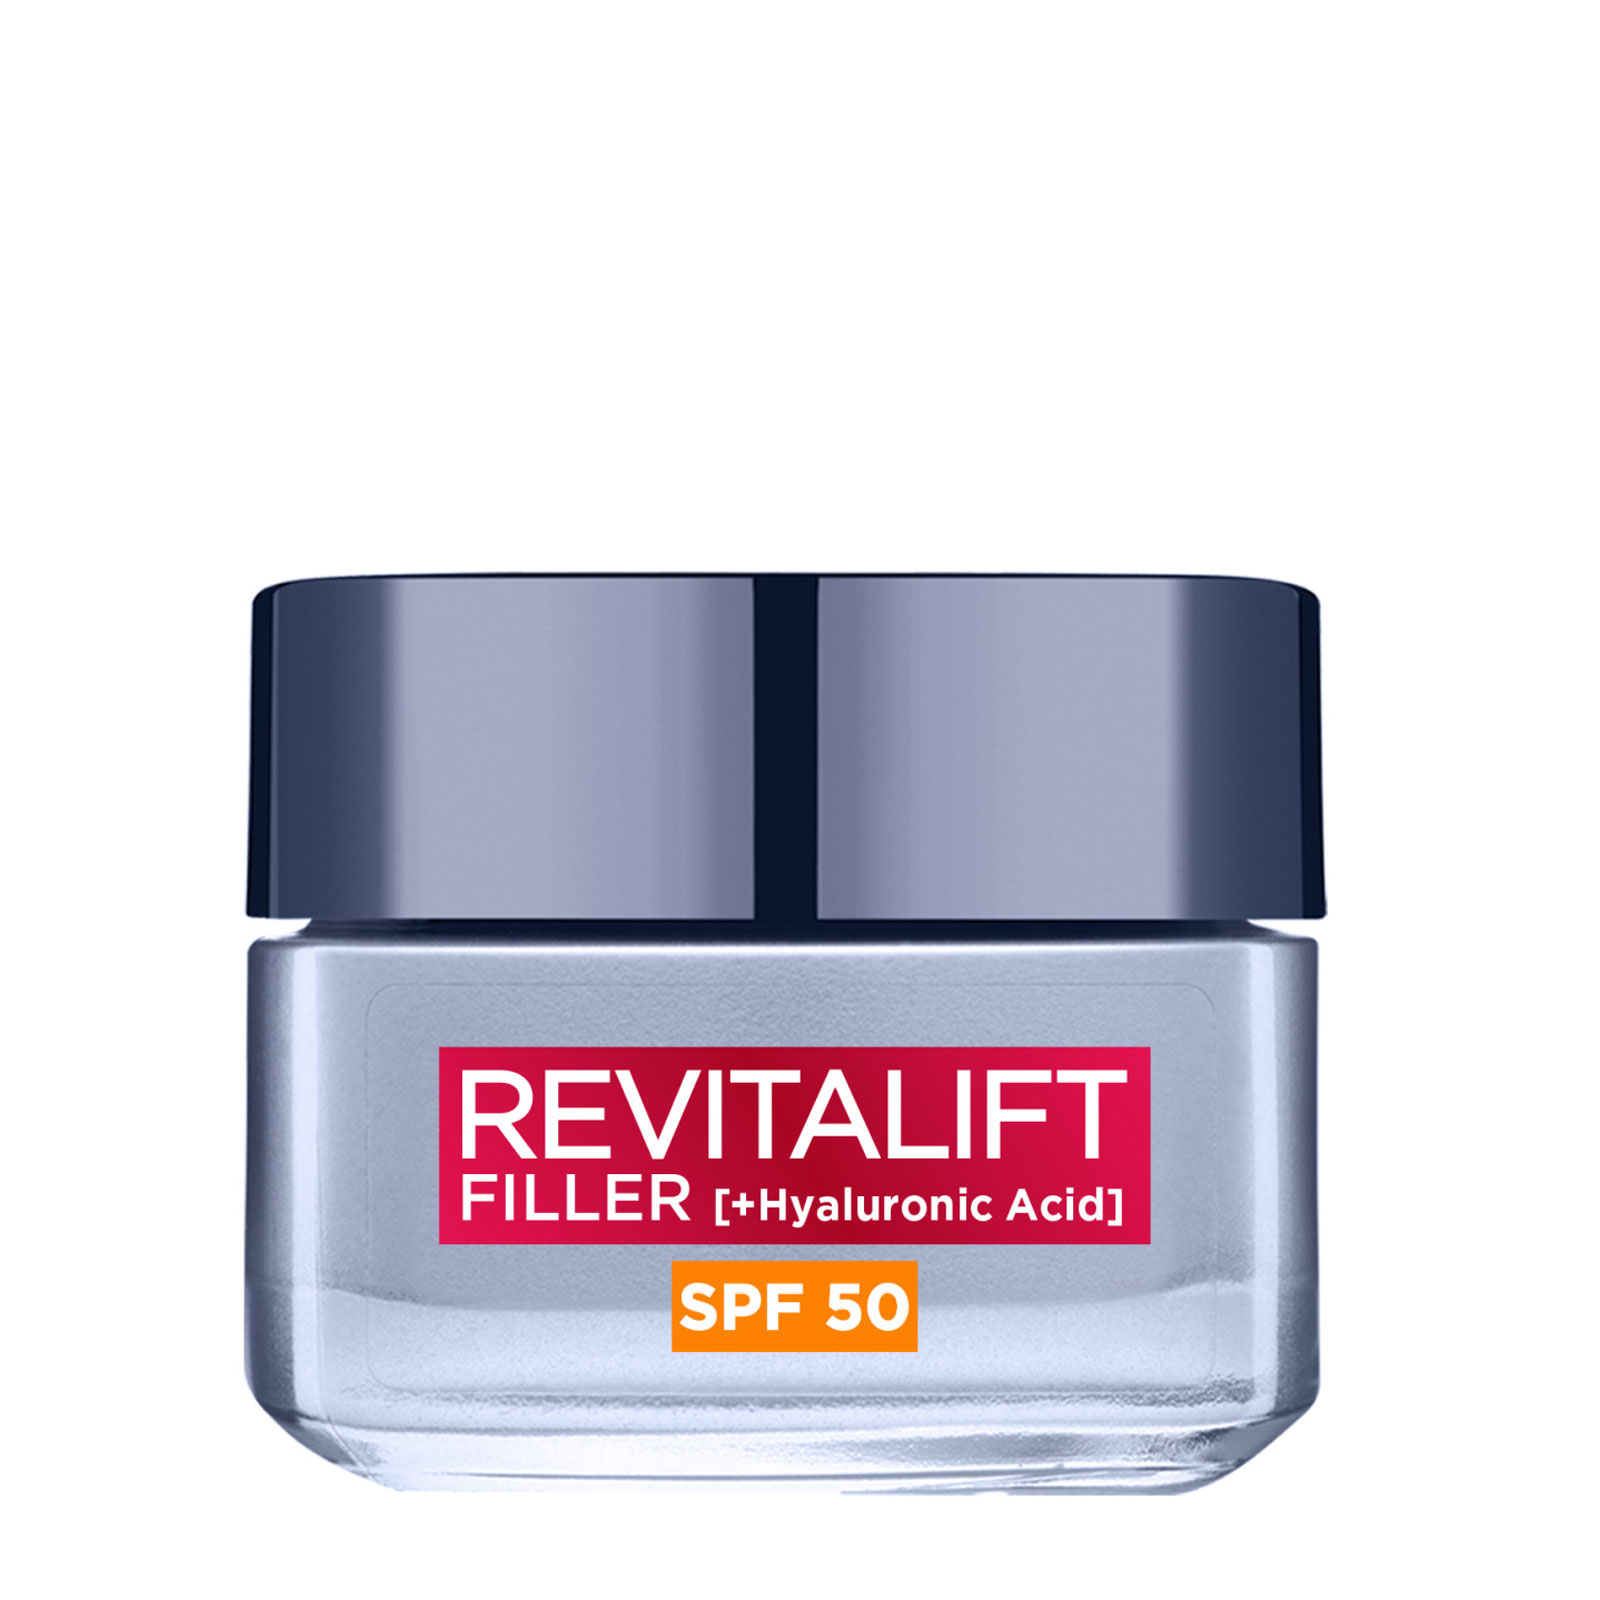 L'Oreal Paris Revitalift Filler + Hyaluronic Acid Anti Ageing Anti-Wrinkle Spf50 Replumping Day Crea